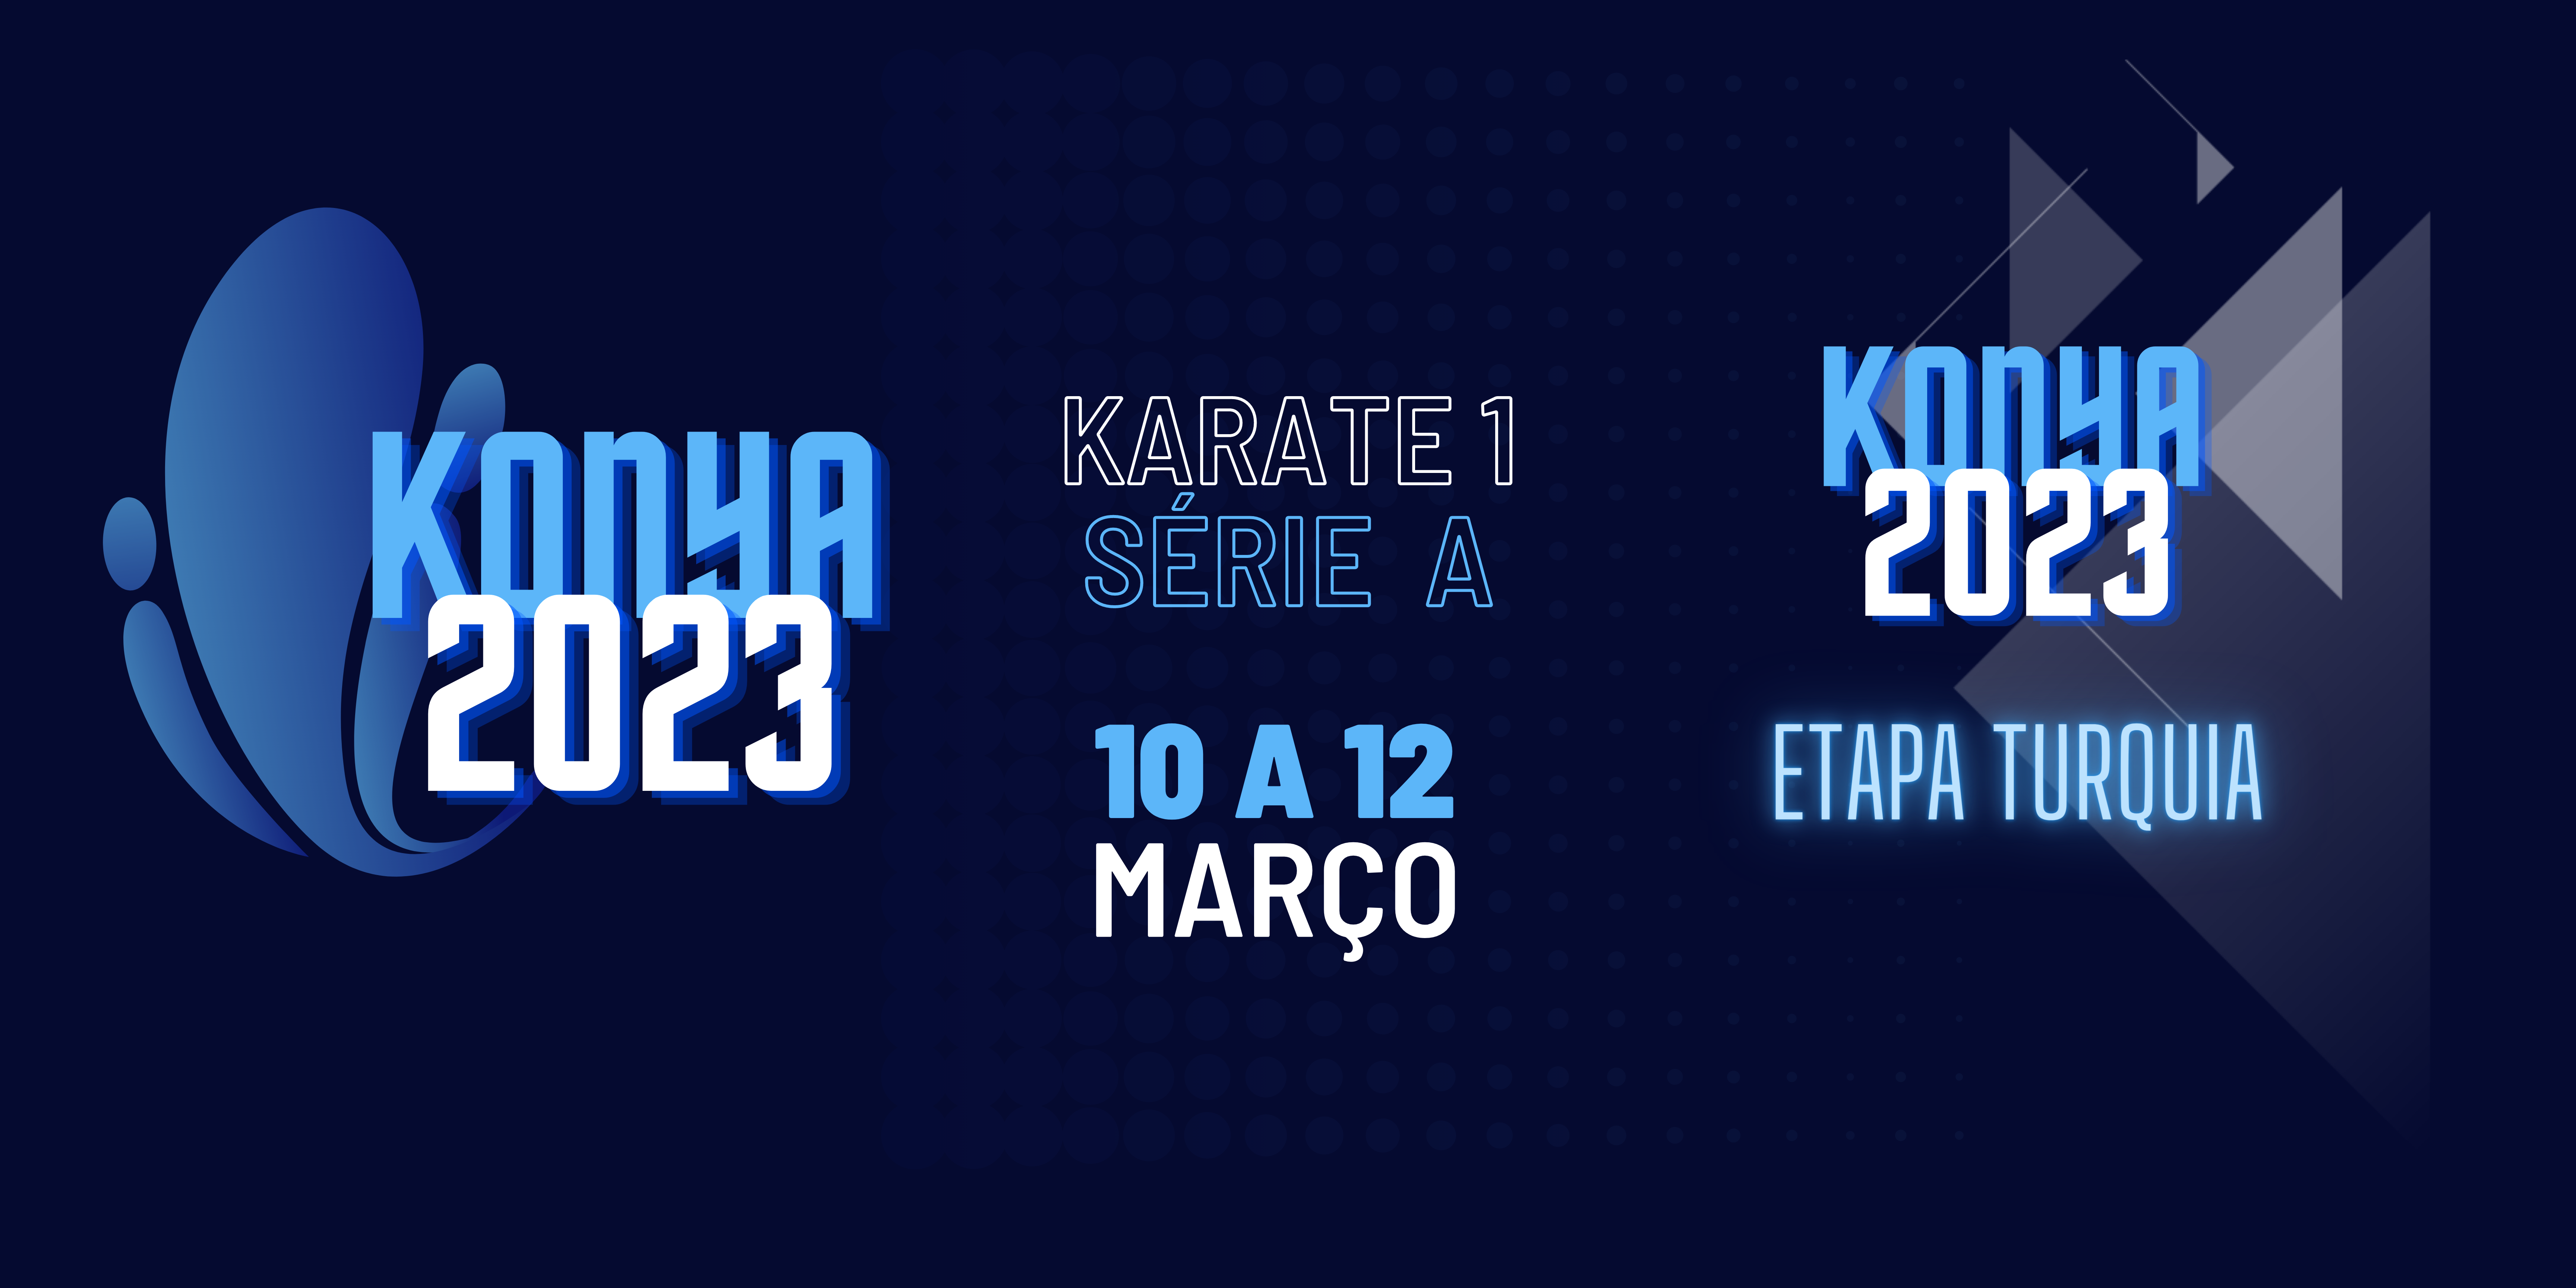 “Karate 1-Series A começaram hoje em Konya na Turquia.”